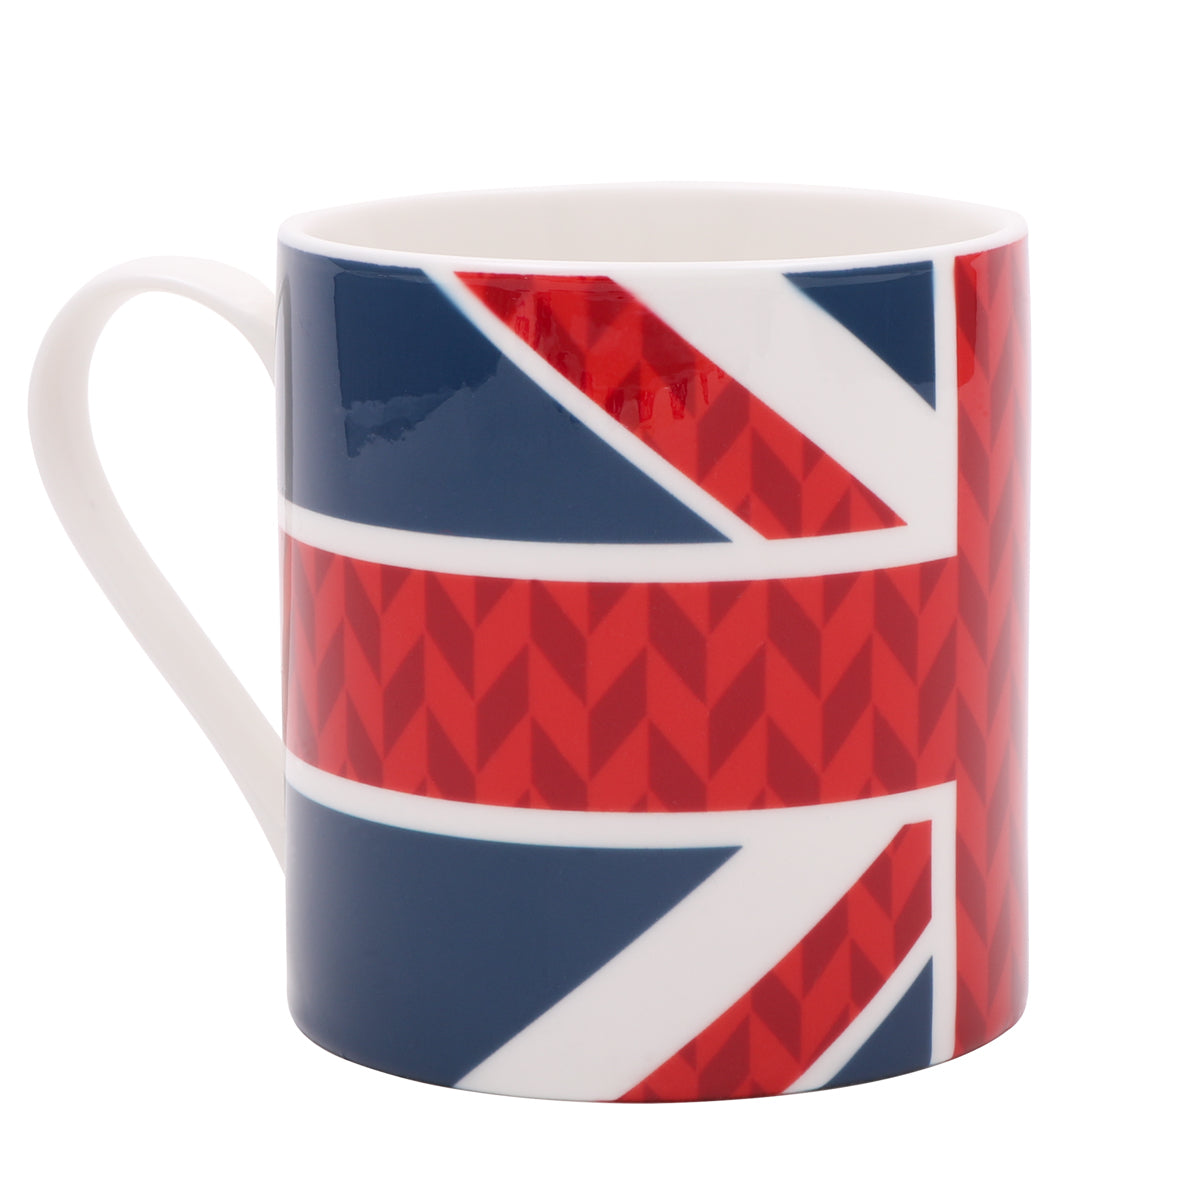 Jacks & Co Union Jack Flag Mug